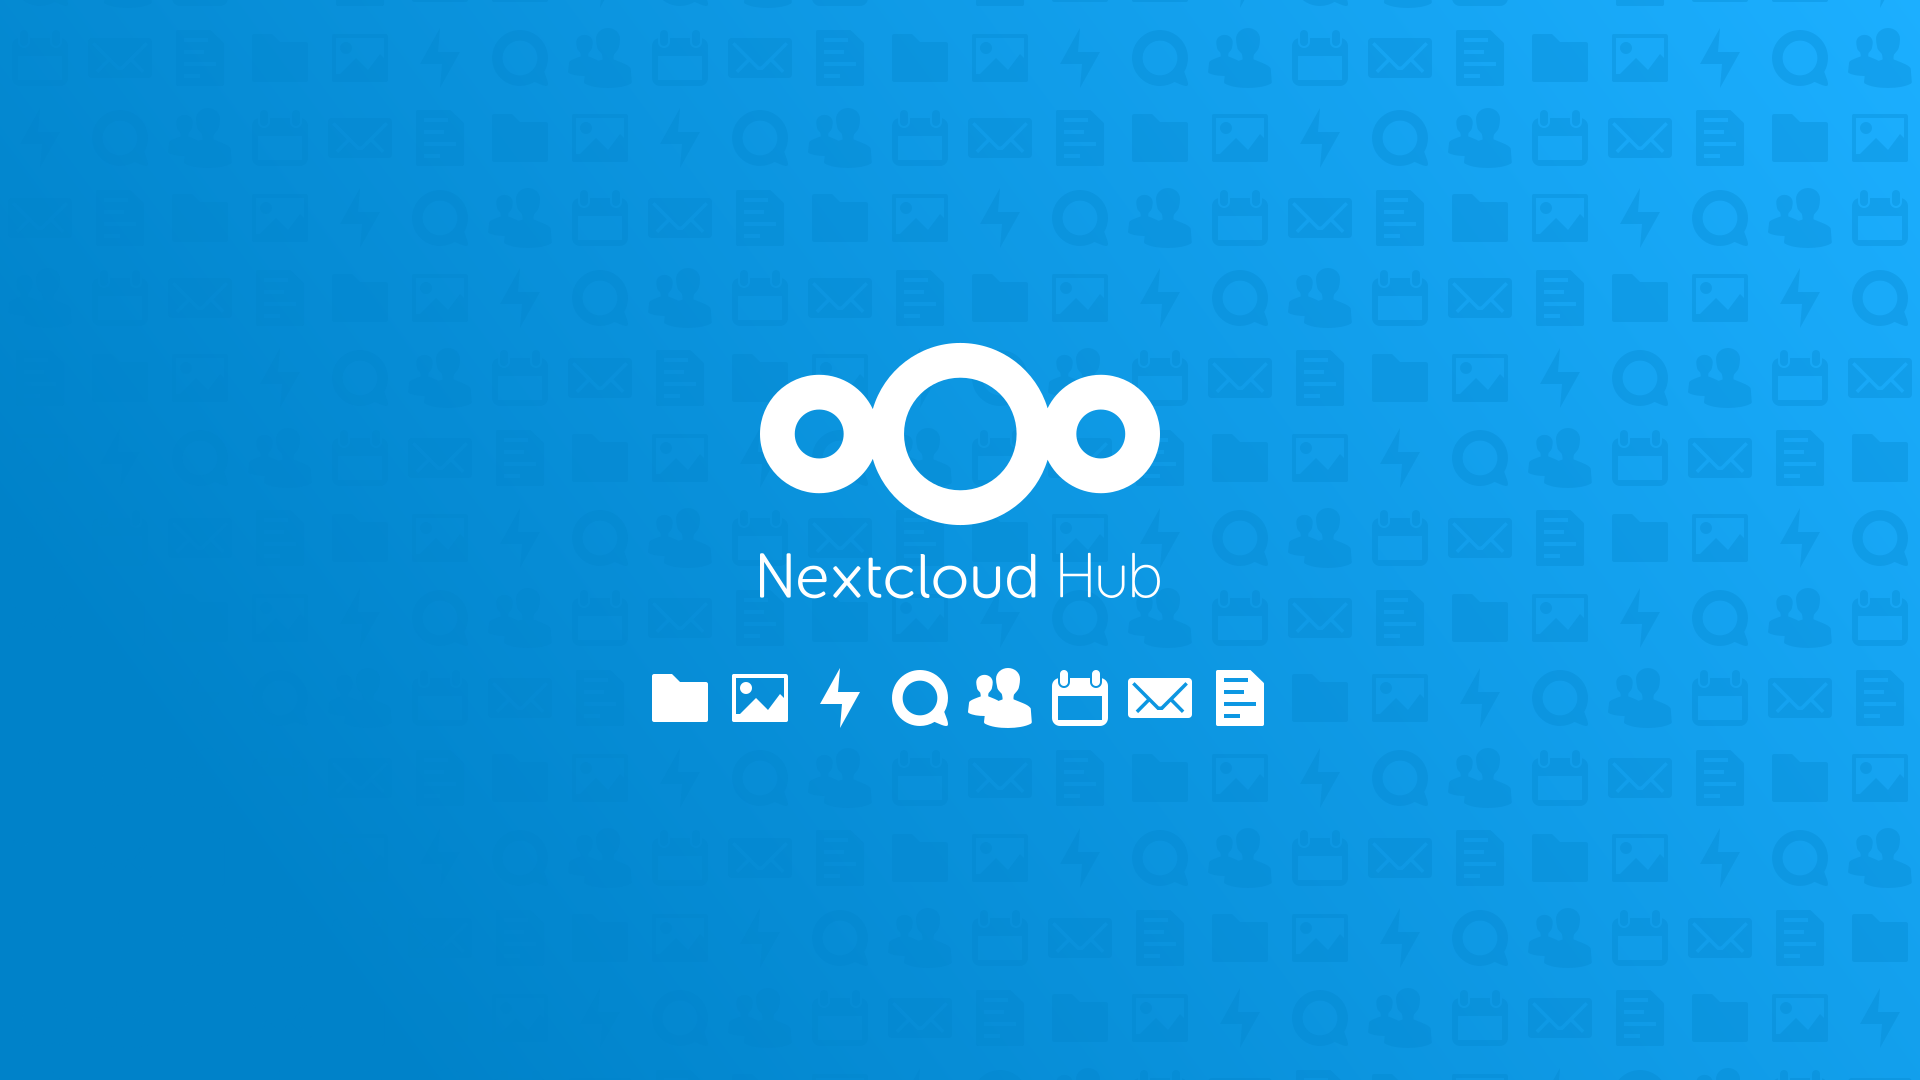 Nextcloud hub icons